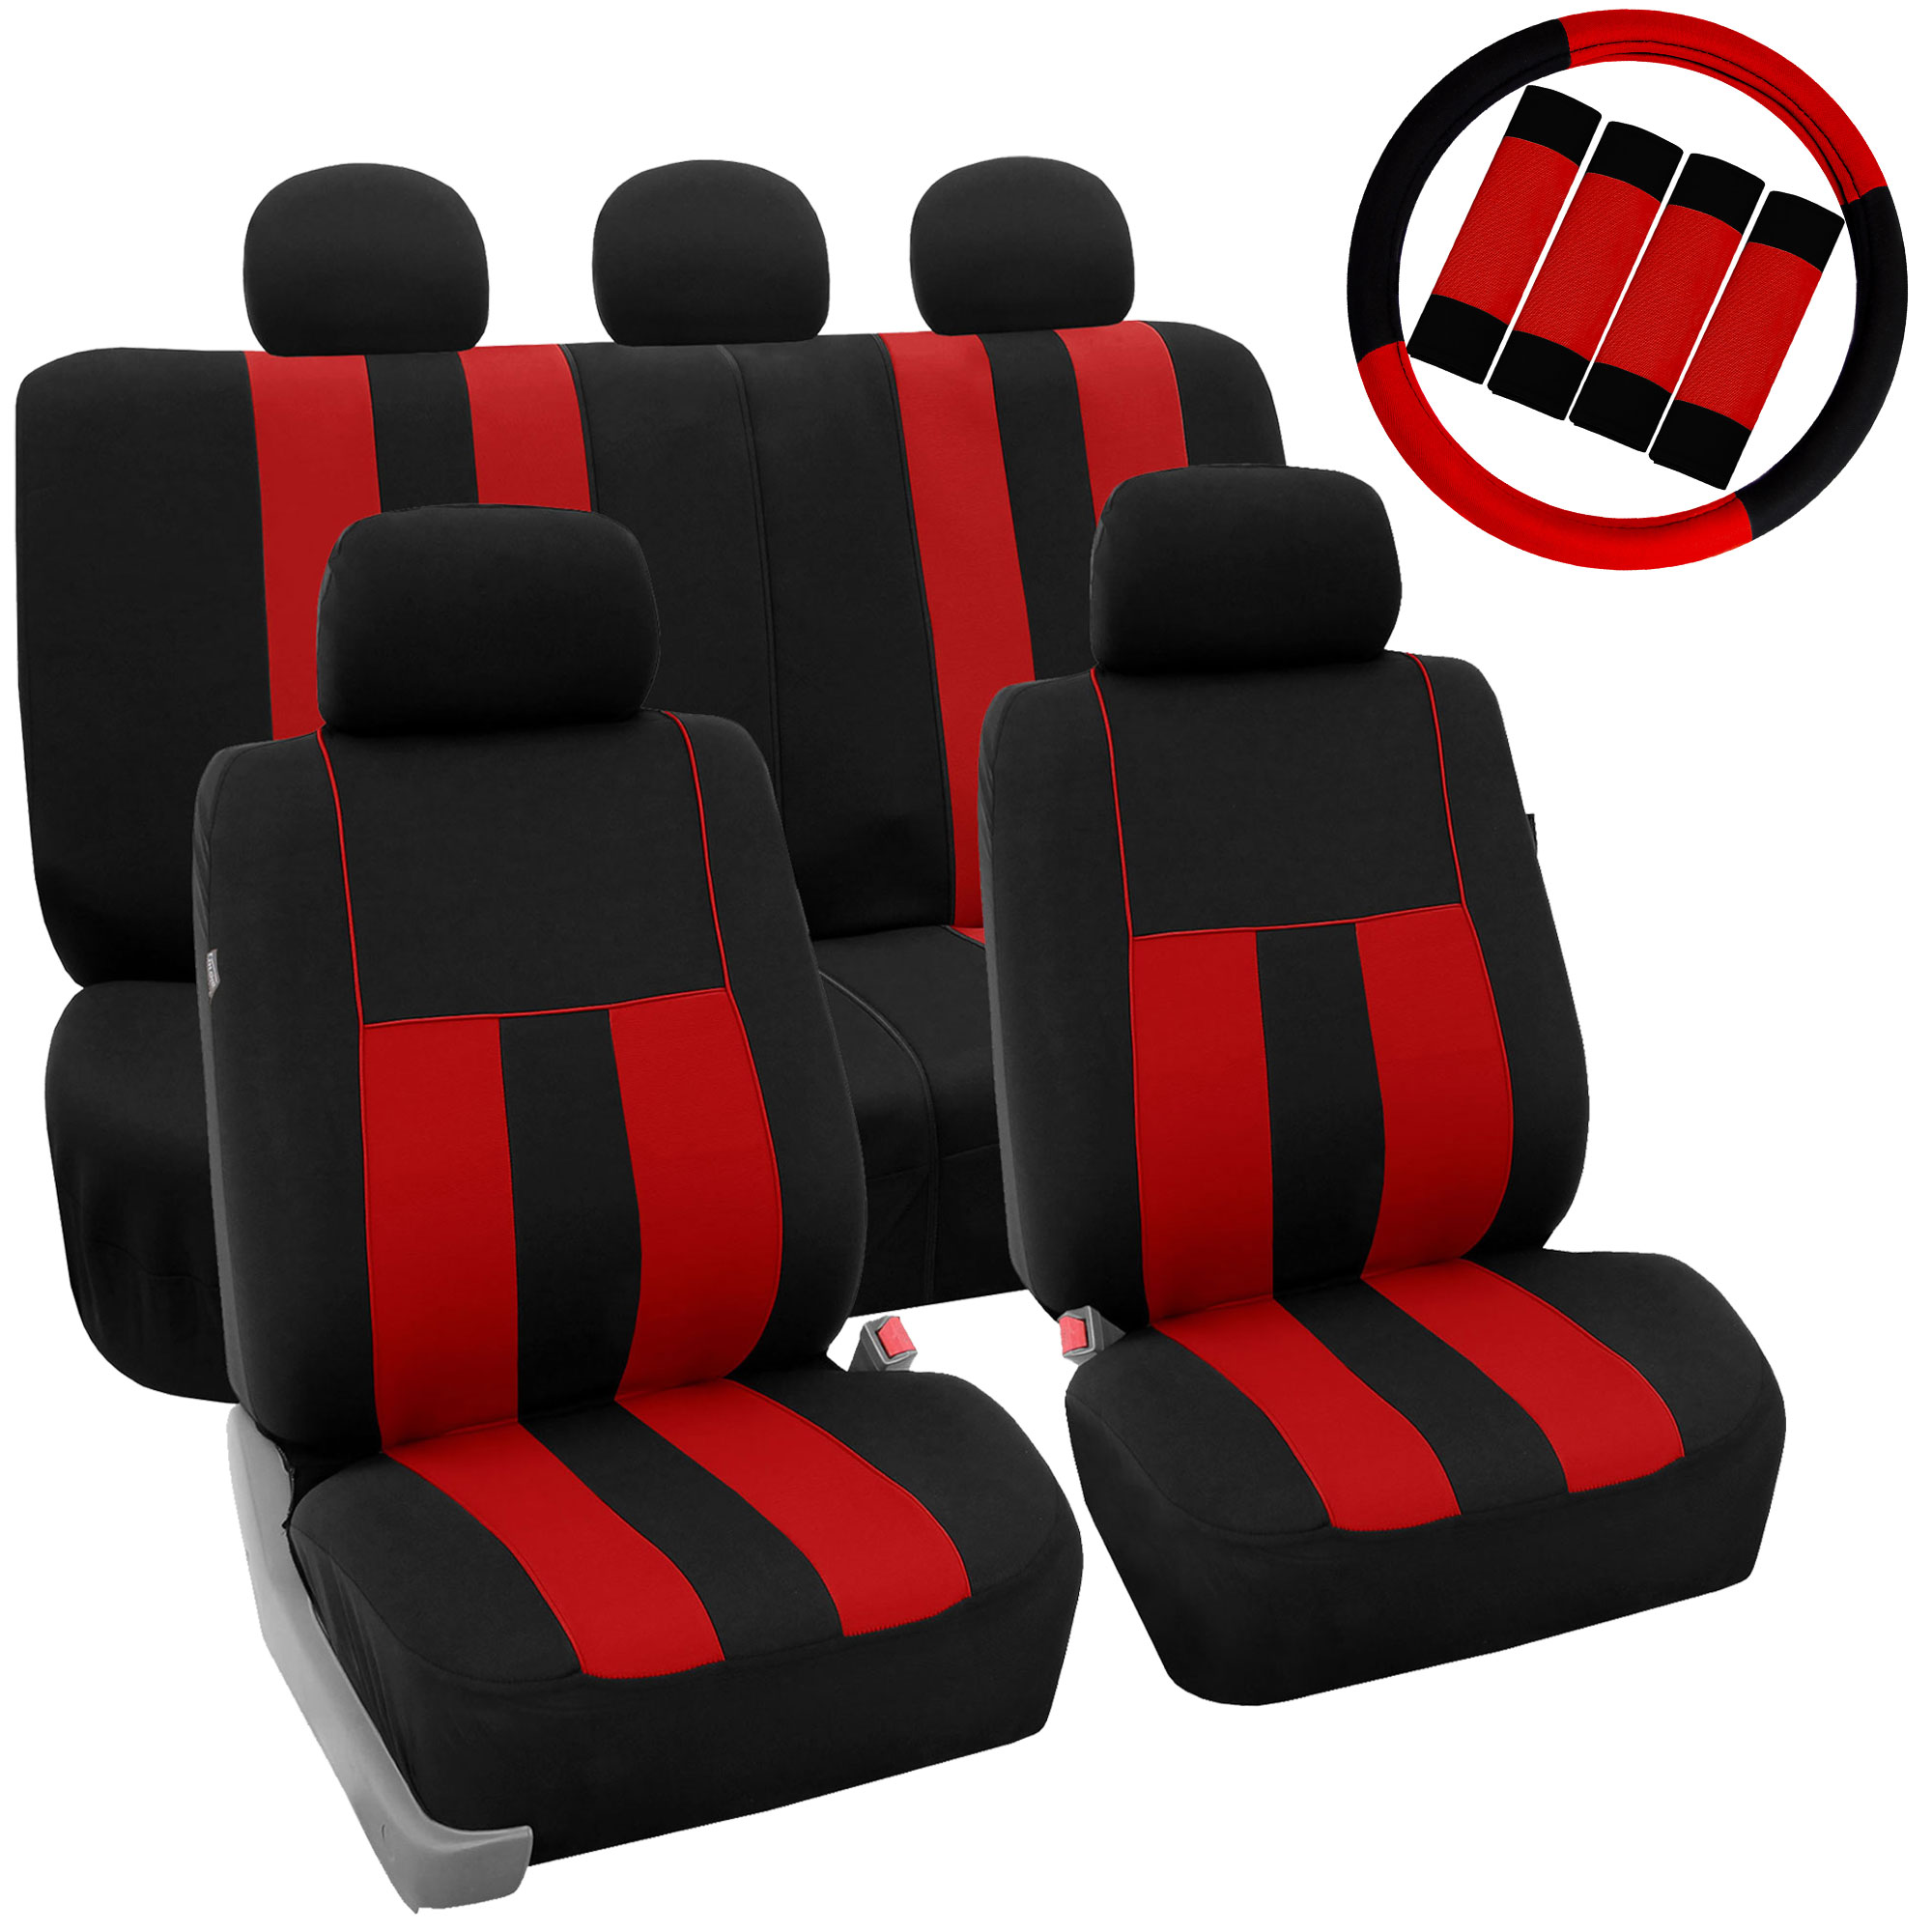 FH Group Car Seat Covers Striking Striped for Sedan, SUV, Van, Full Set w/ Steering Cover & Belt Pads, Red Black